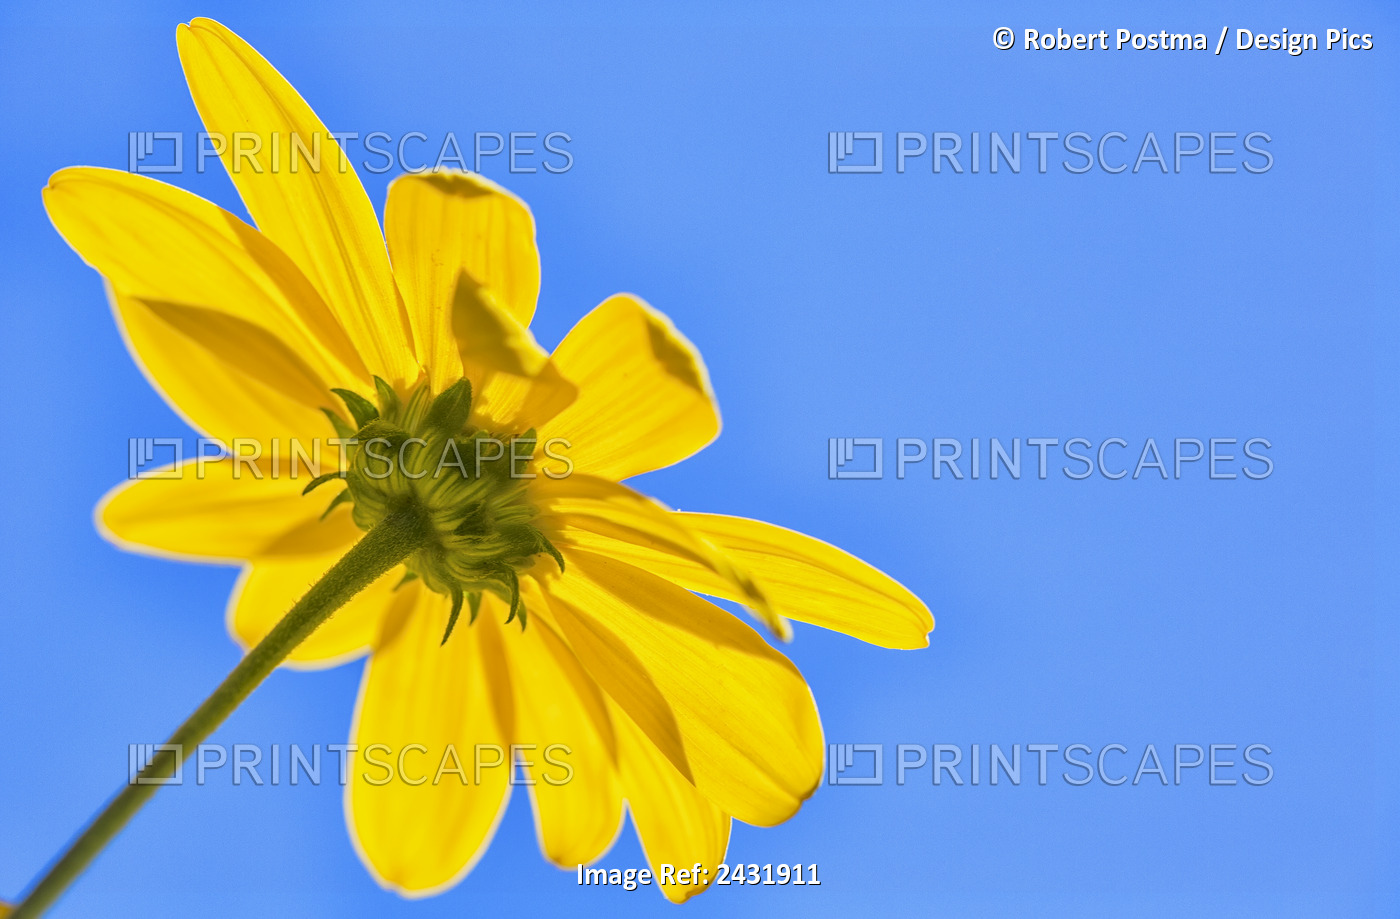 Yellow Flower Against A Blue Sky; Bolivia